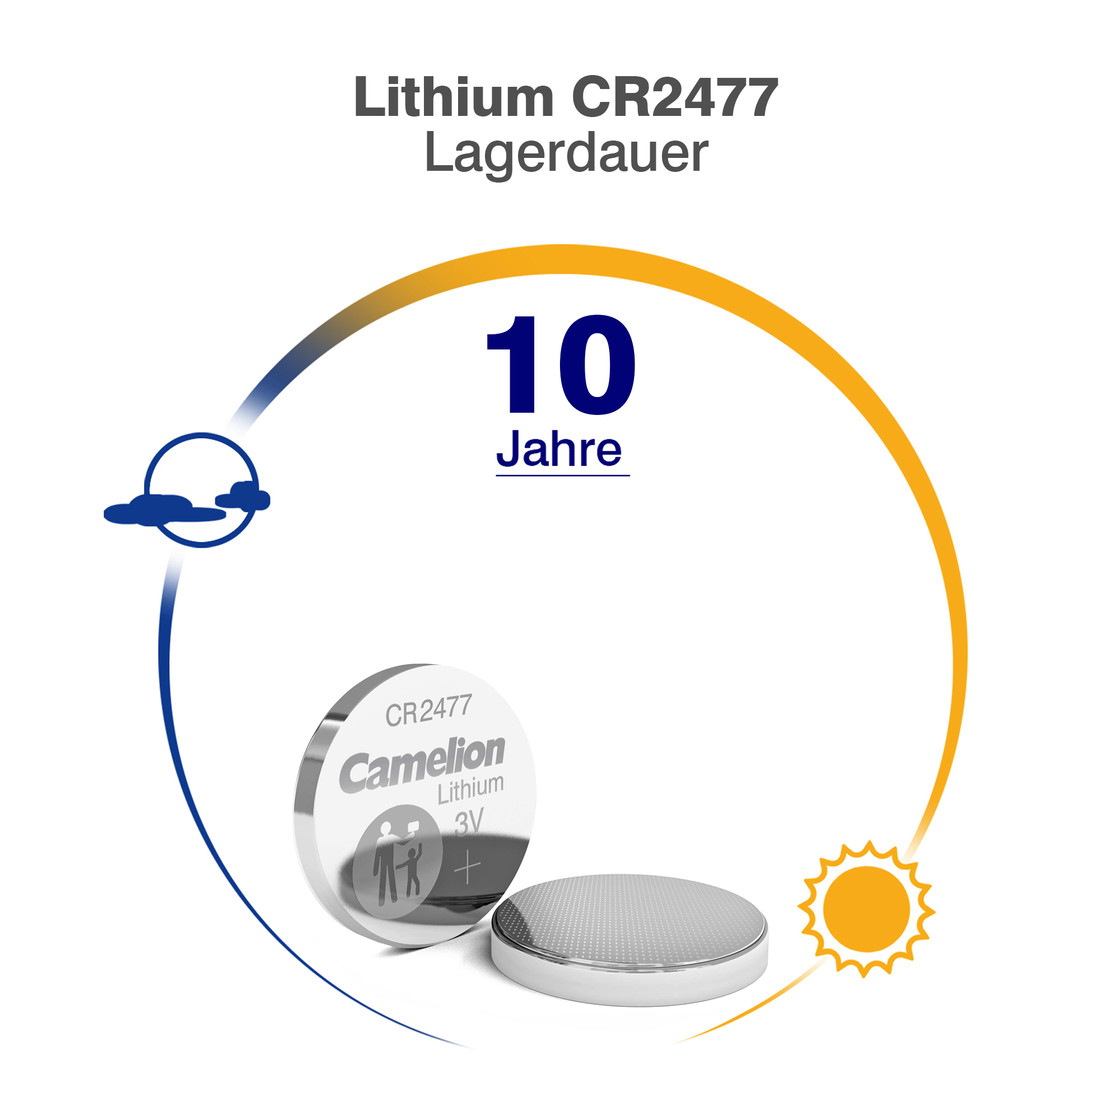 CR2477 - Lithium Batteries - Primary Batteries - Panasonic